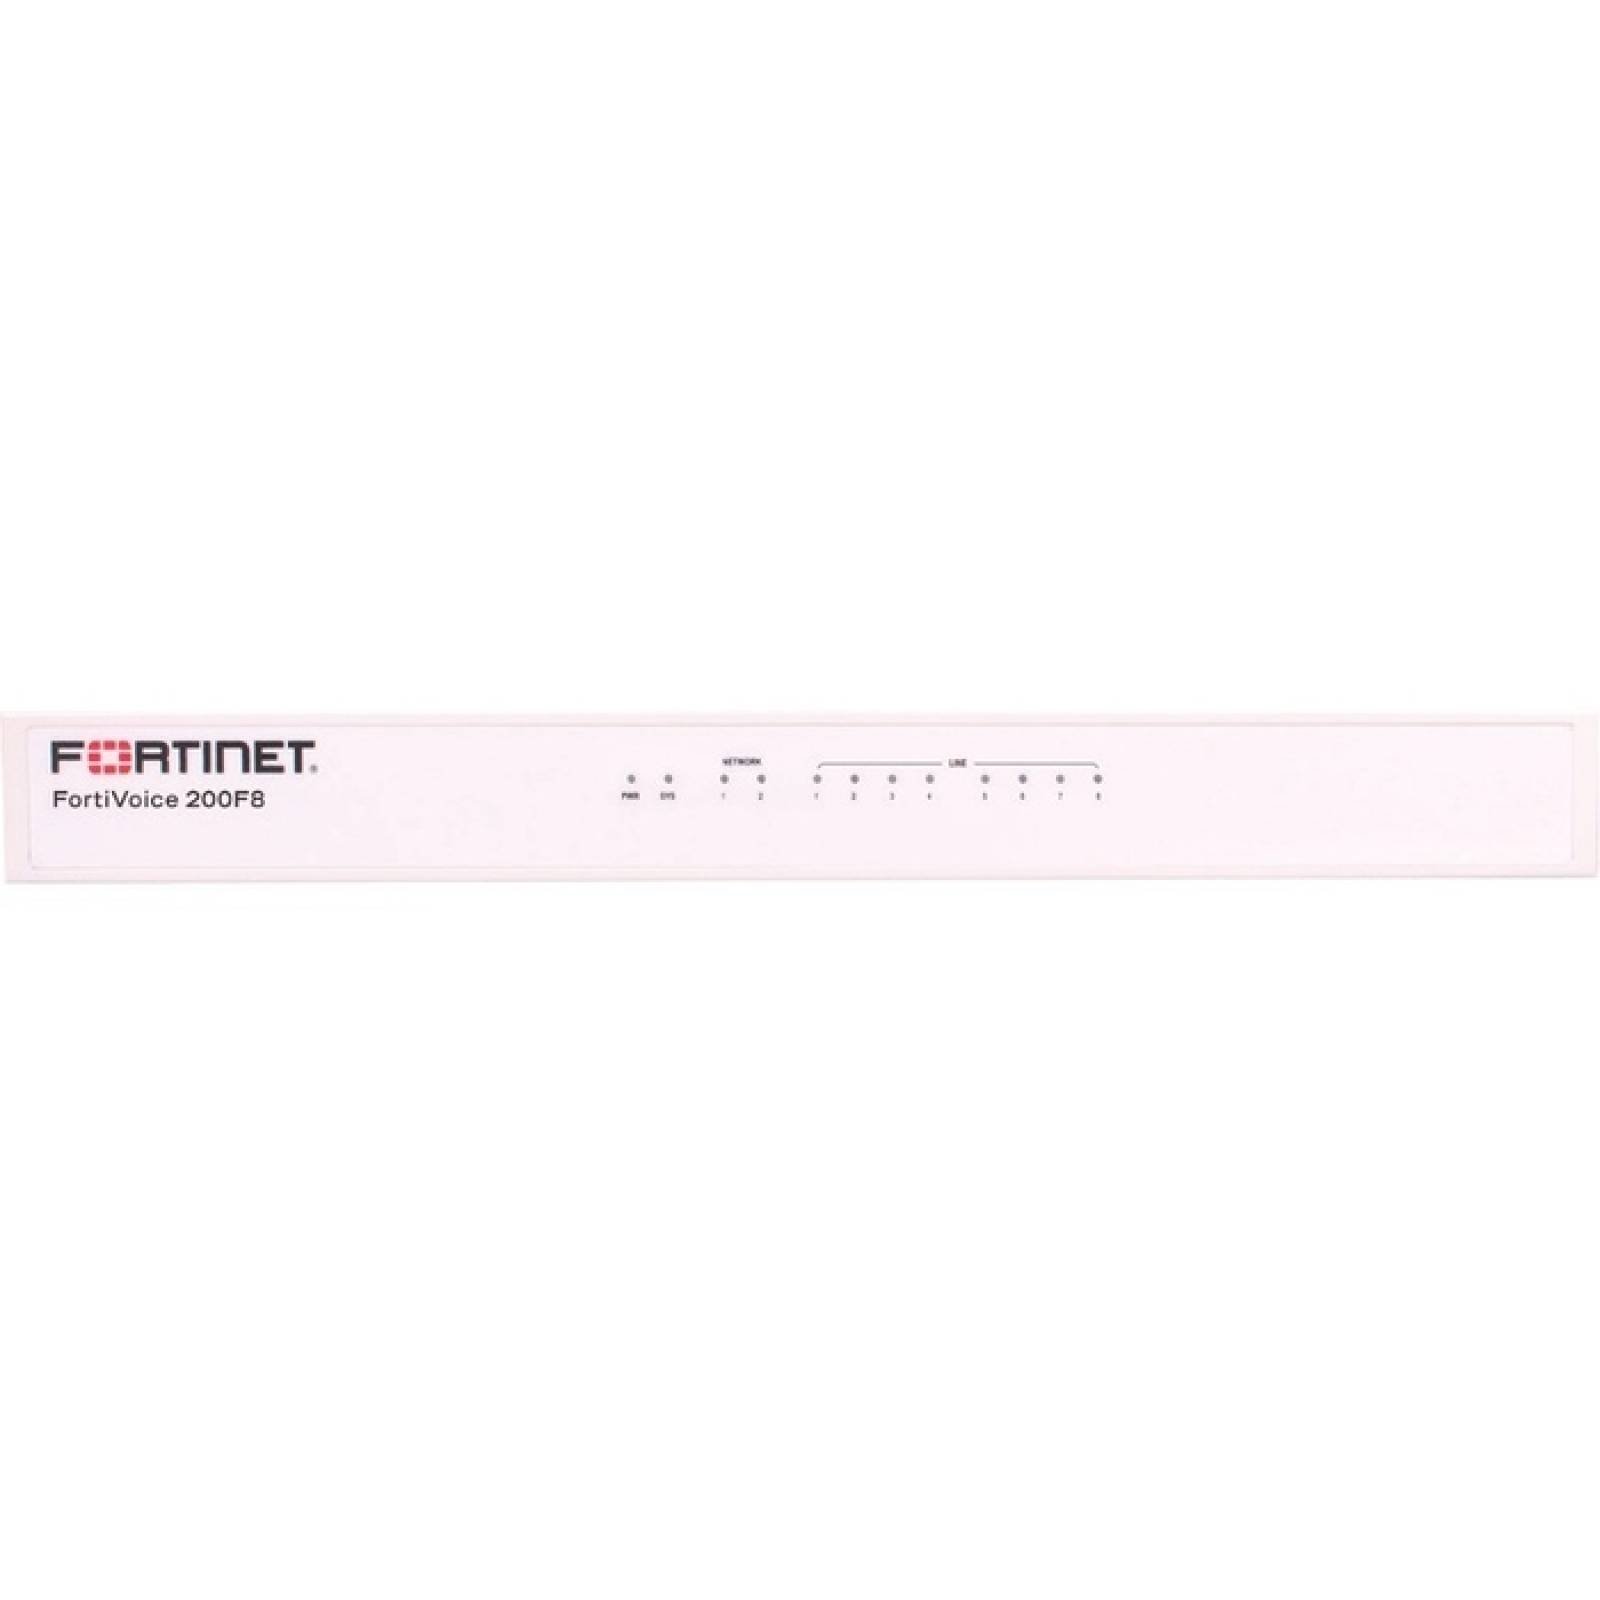 Fortinet FortiVoice Enterprise FVE200F8 VoIP Gateway